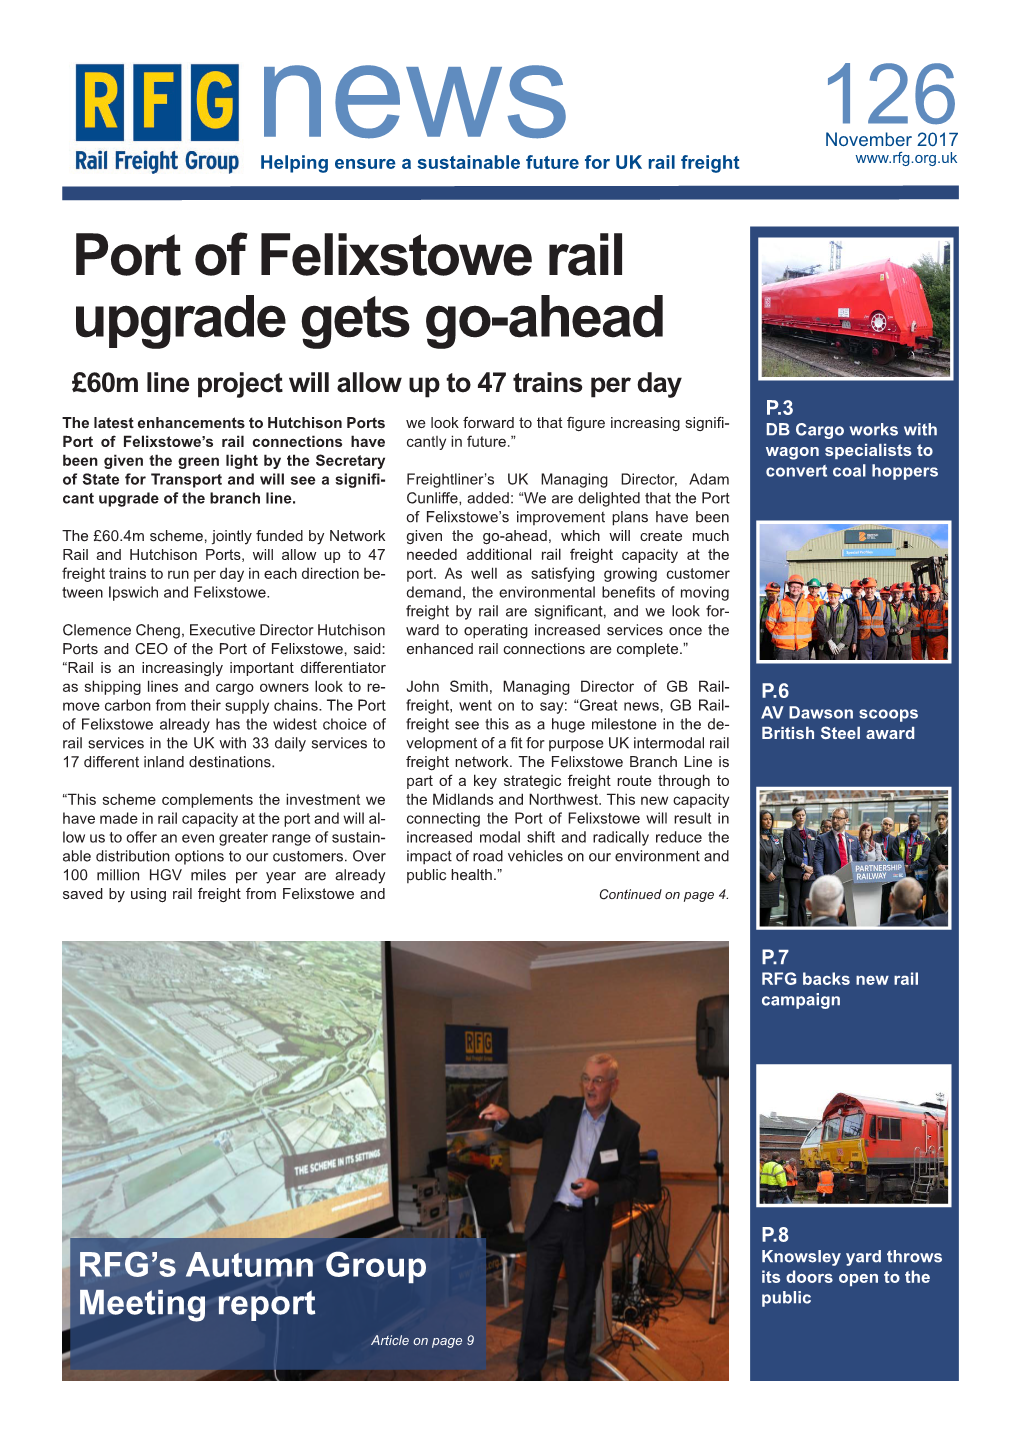 Port of Felixstowe Rail Upgrade Gets Go-Ahead